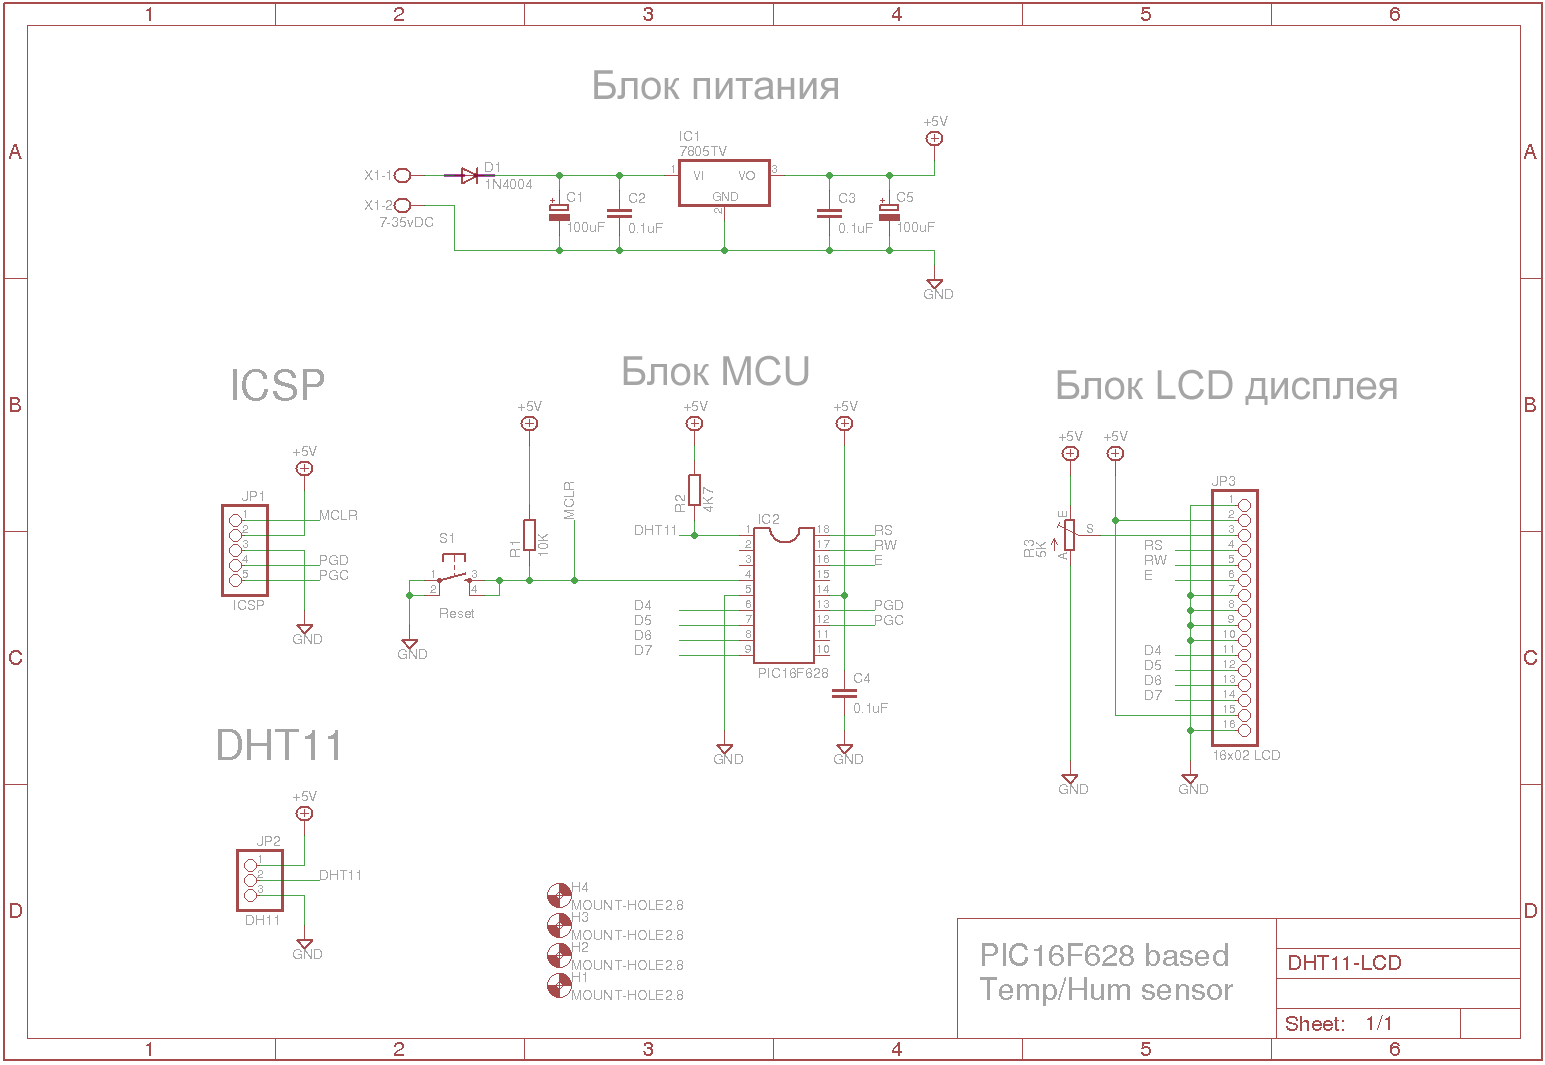 Принципиальная схема термометра на PIC16F628 и DHT11